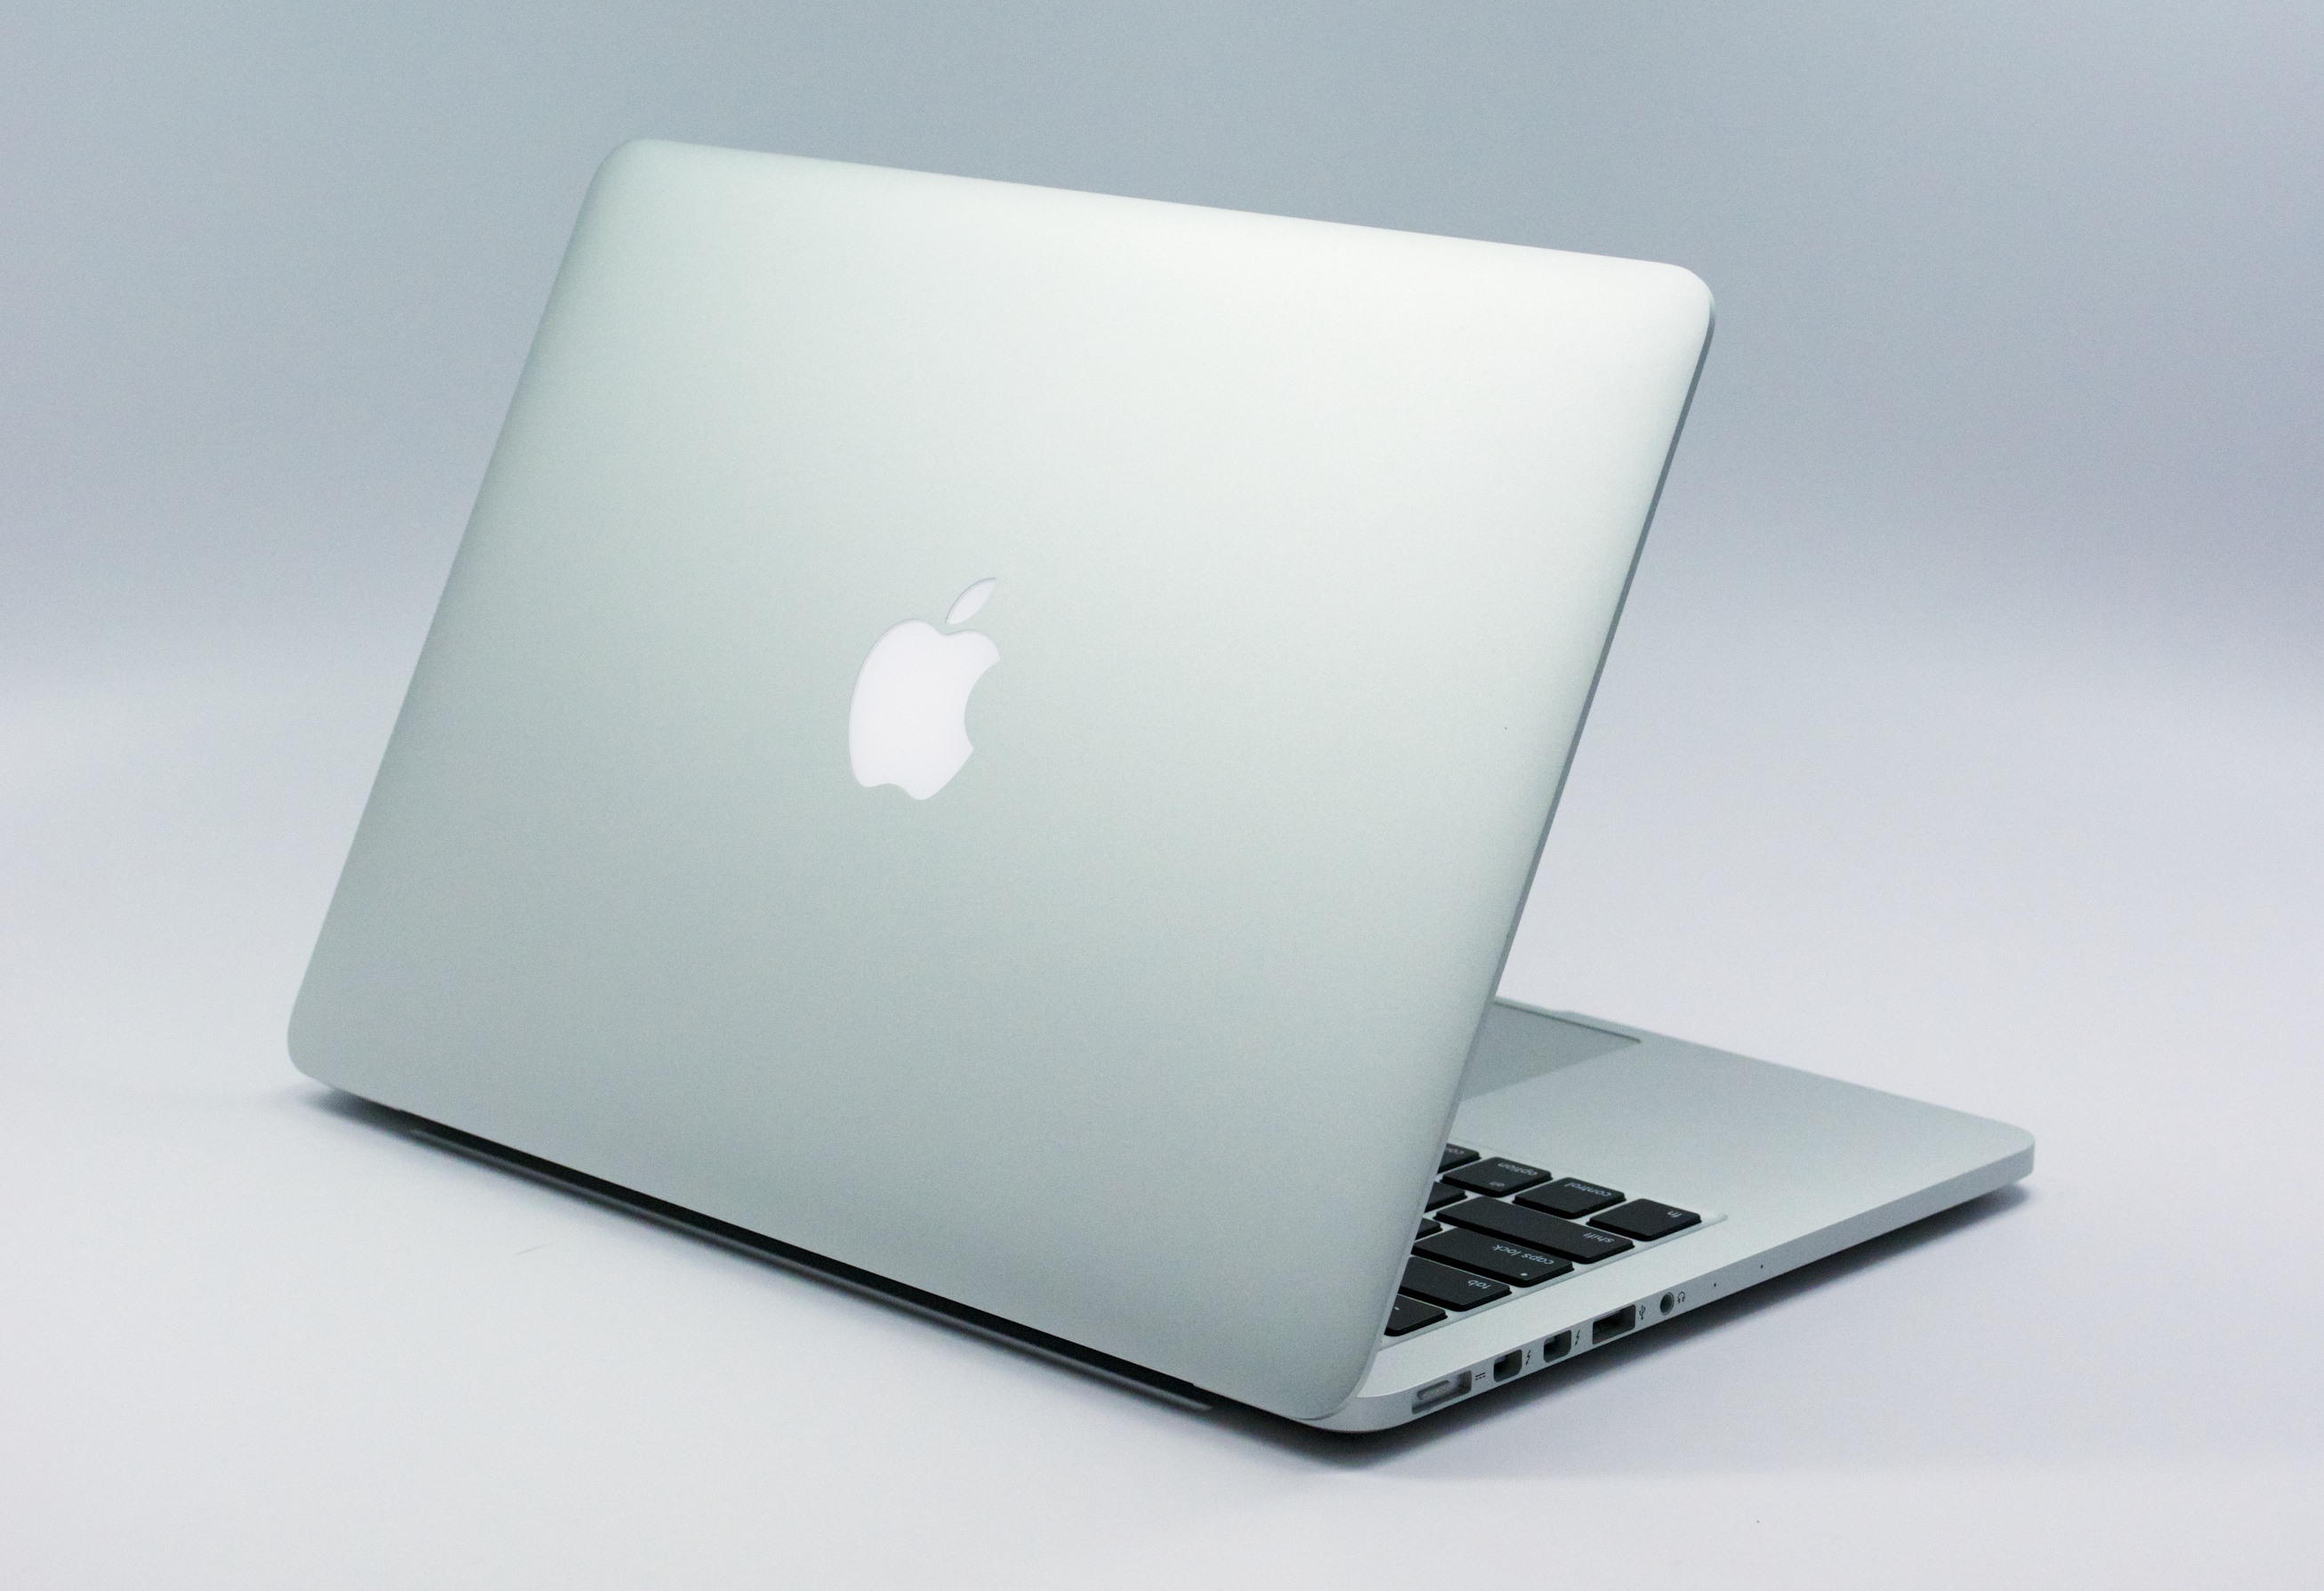 apple mac pro late 2013